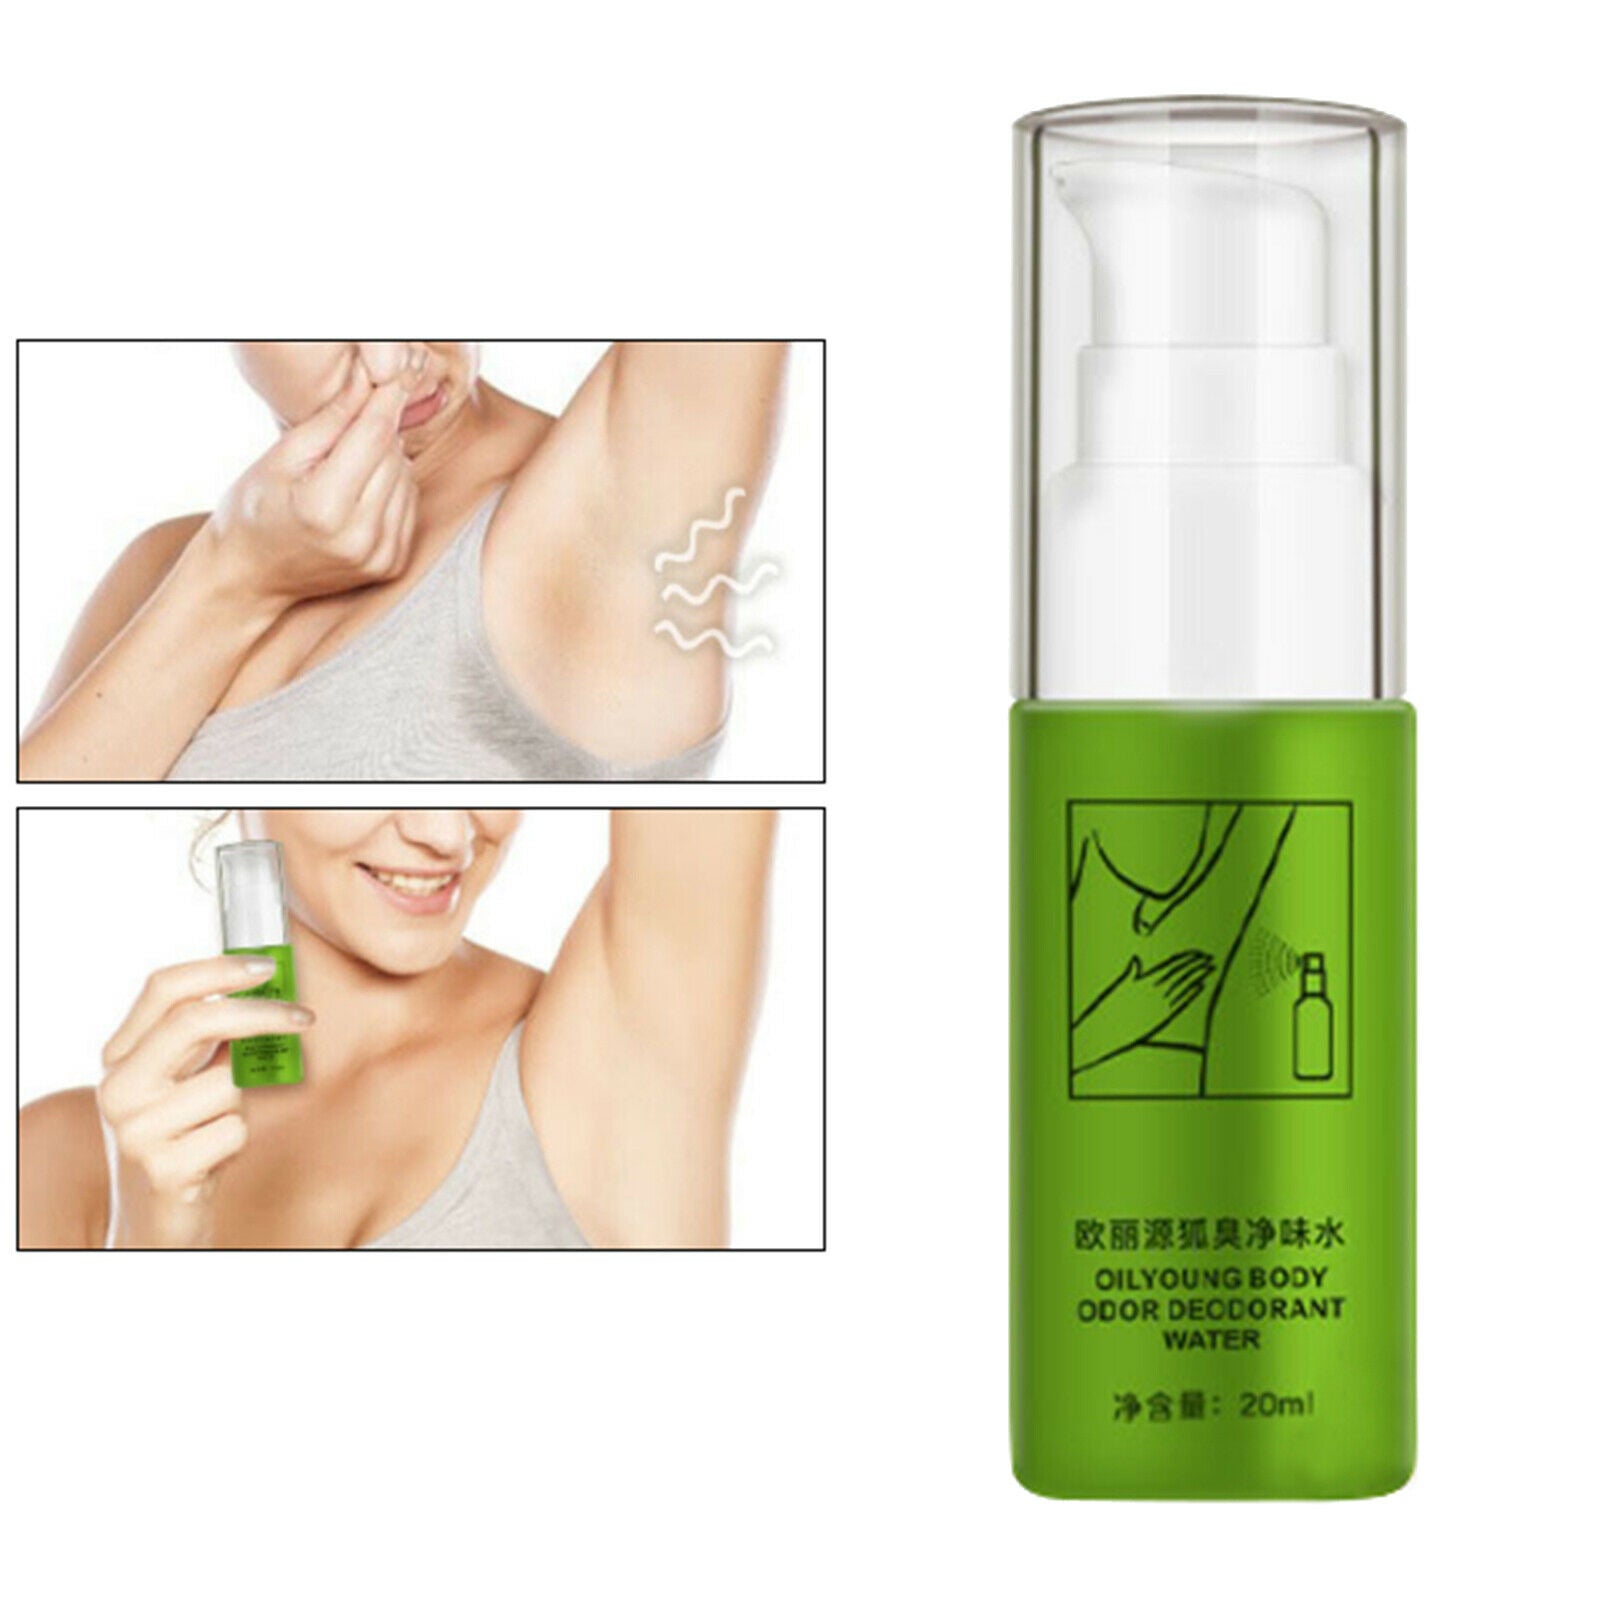 20ml Summer Body Odor Deodorant Water Spray Underarm Sweat deodorization Odor